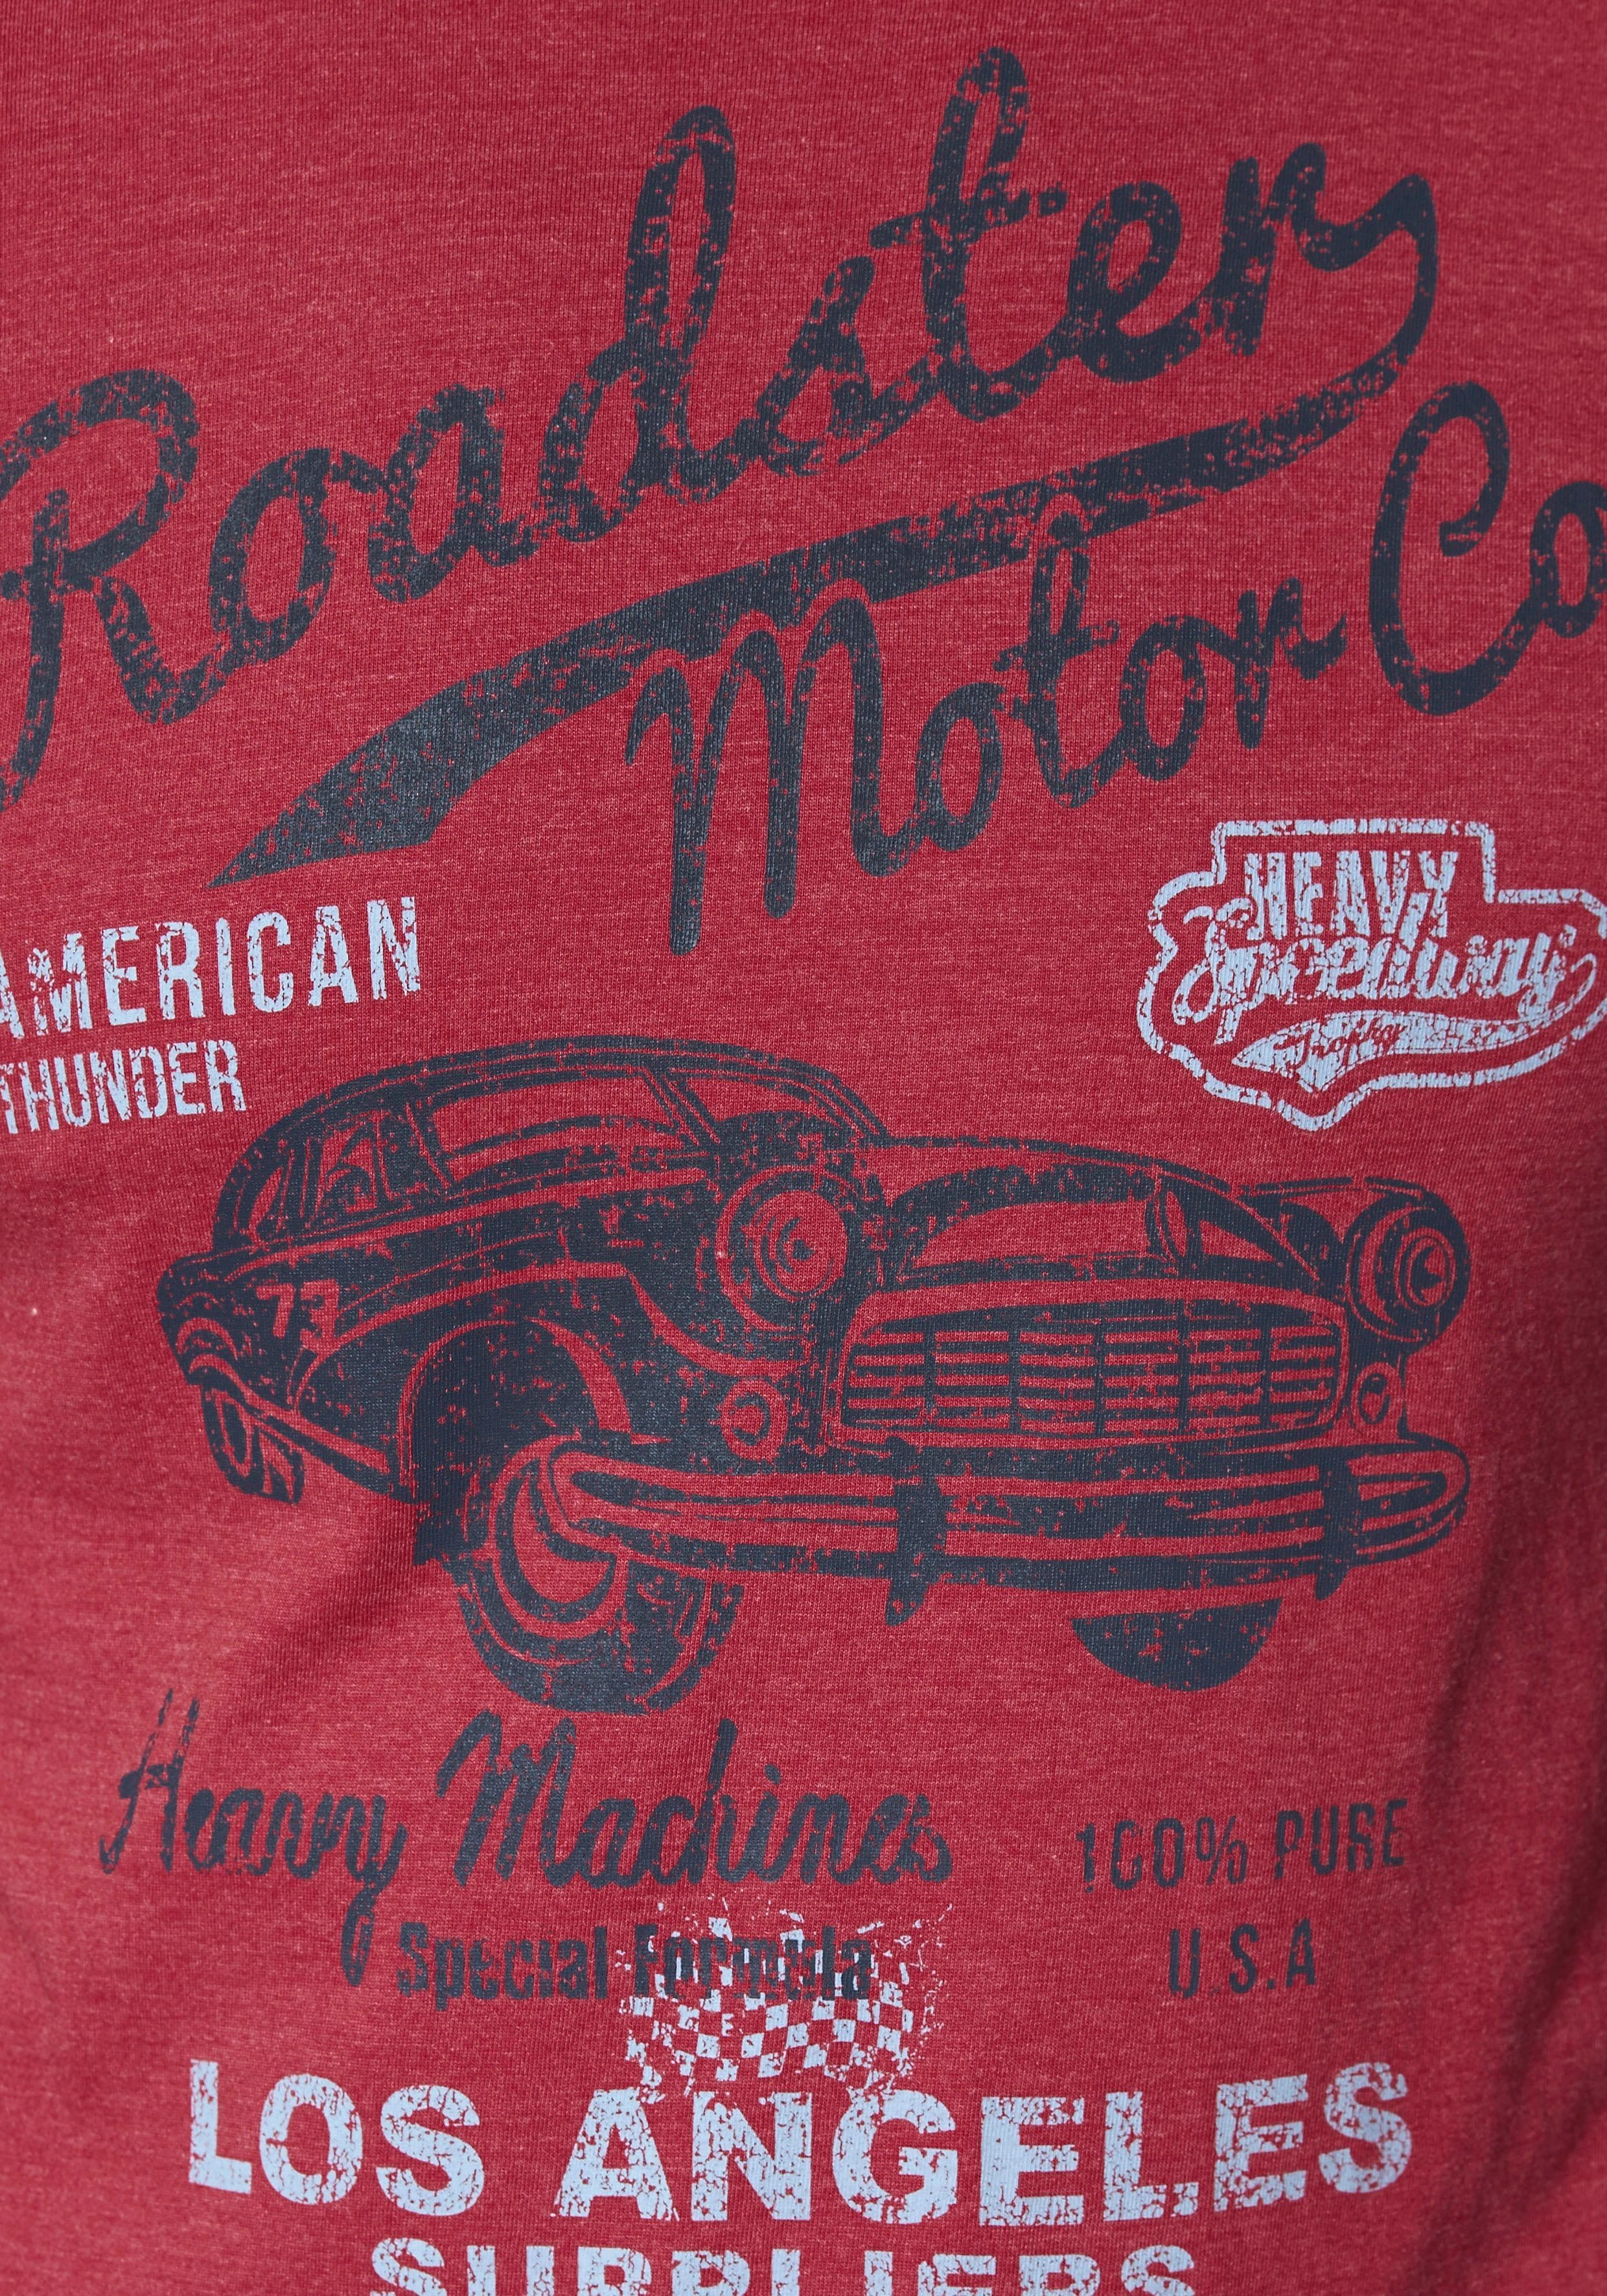 Arizona Vintage T-Shirt Print mit in rot-meliert Optik